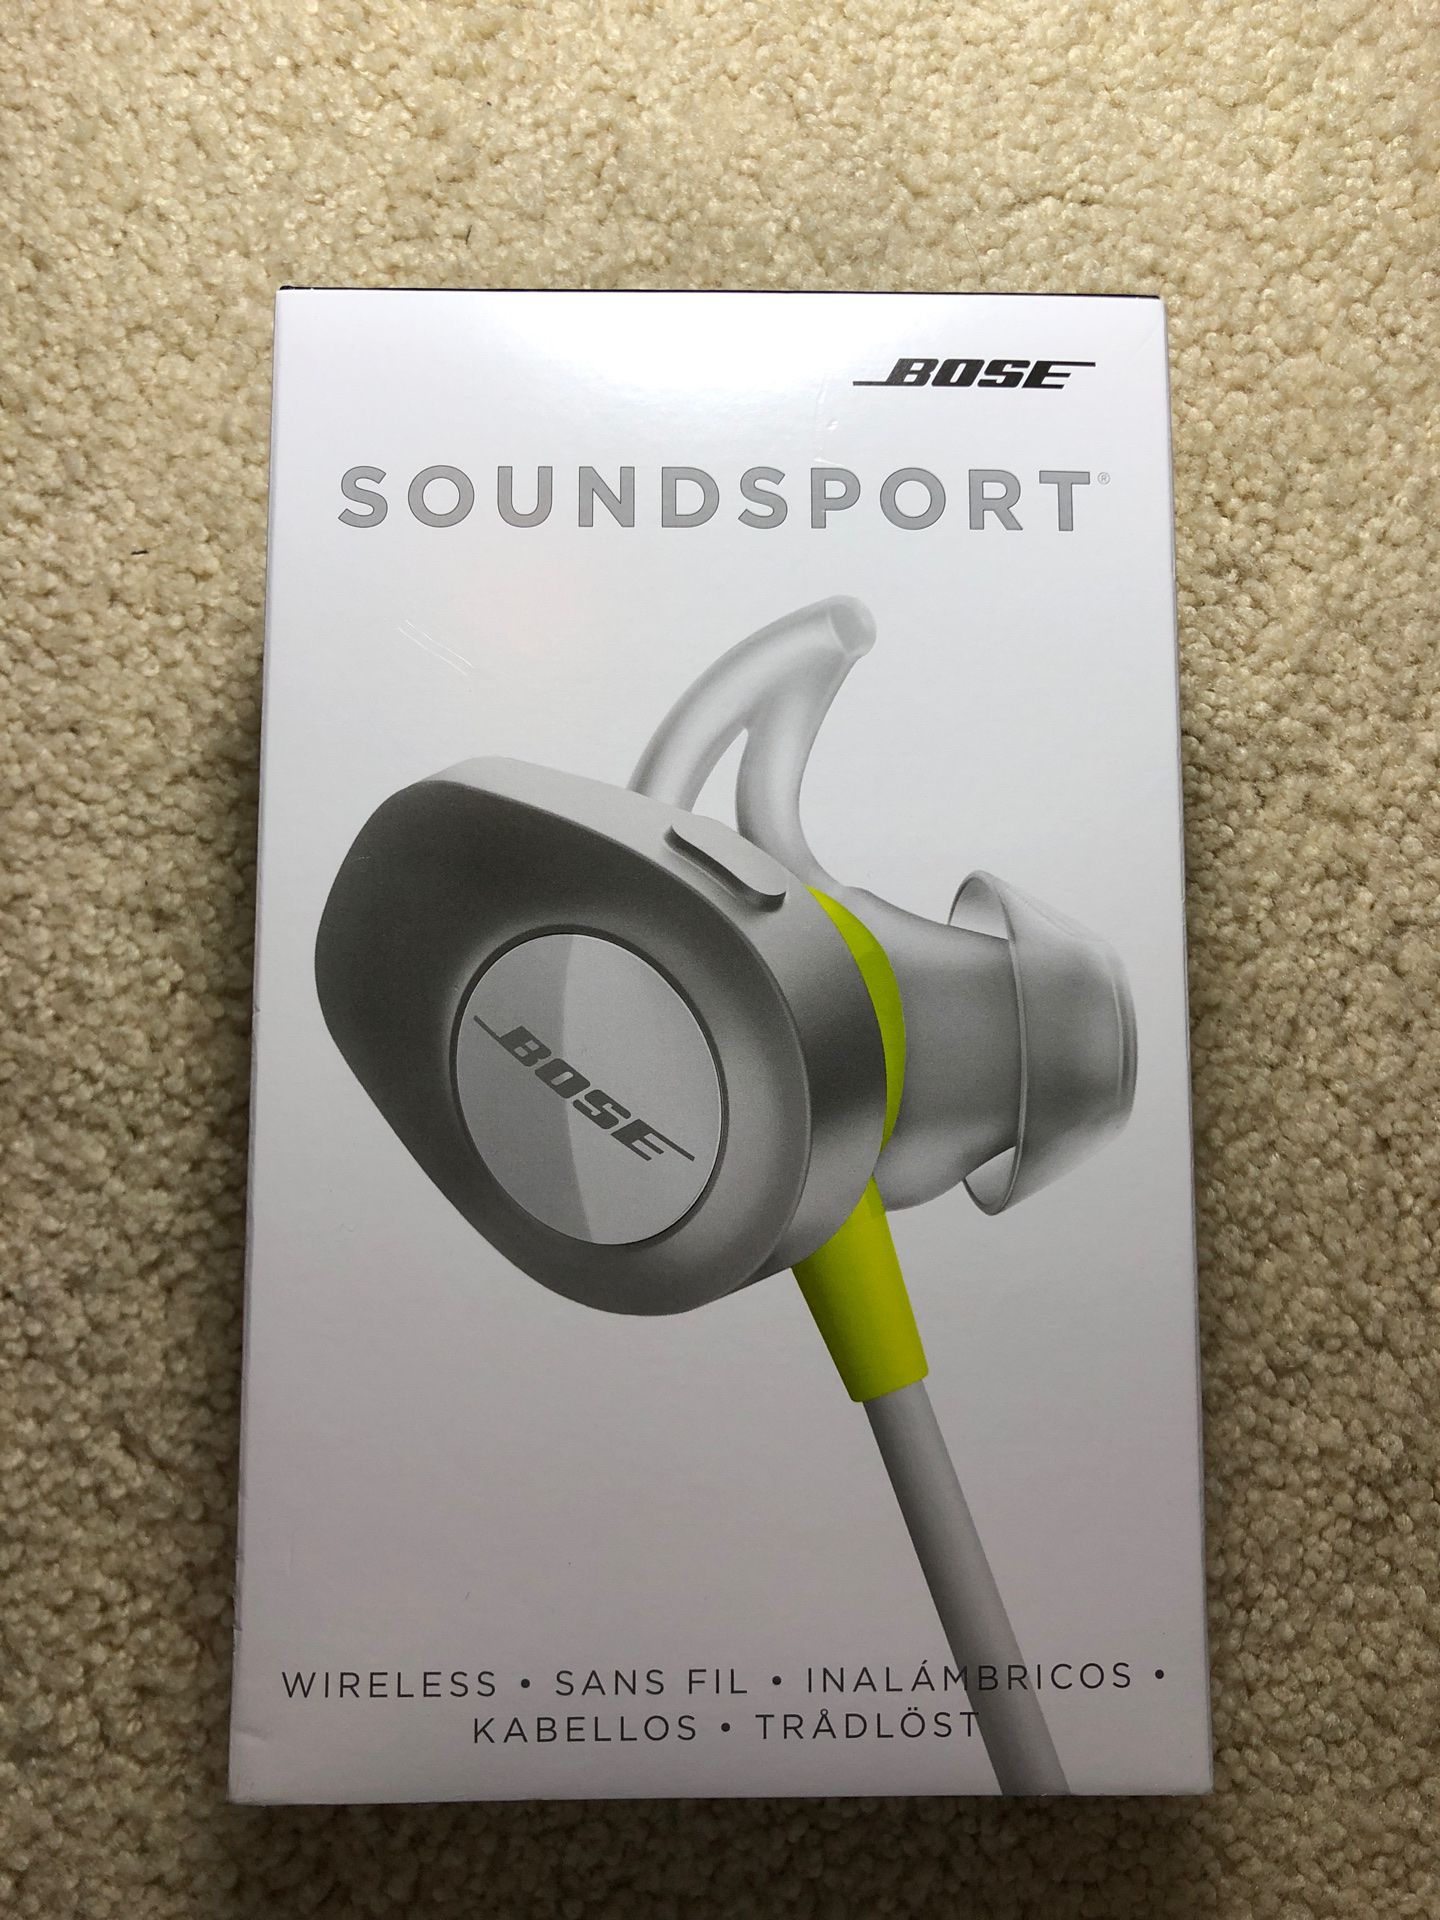 Bose Soundsport wireless earbuds